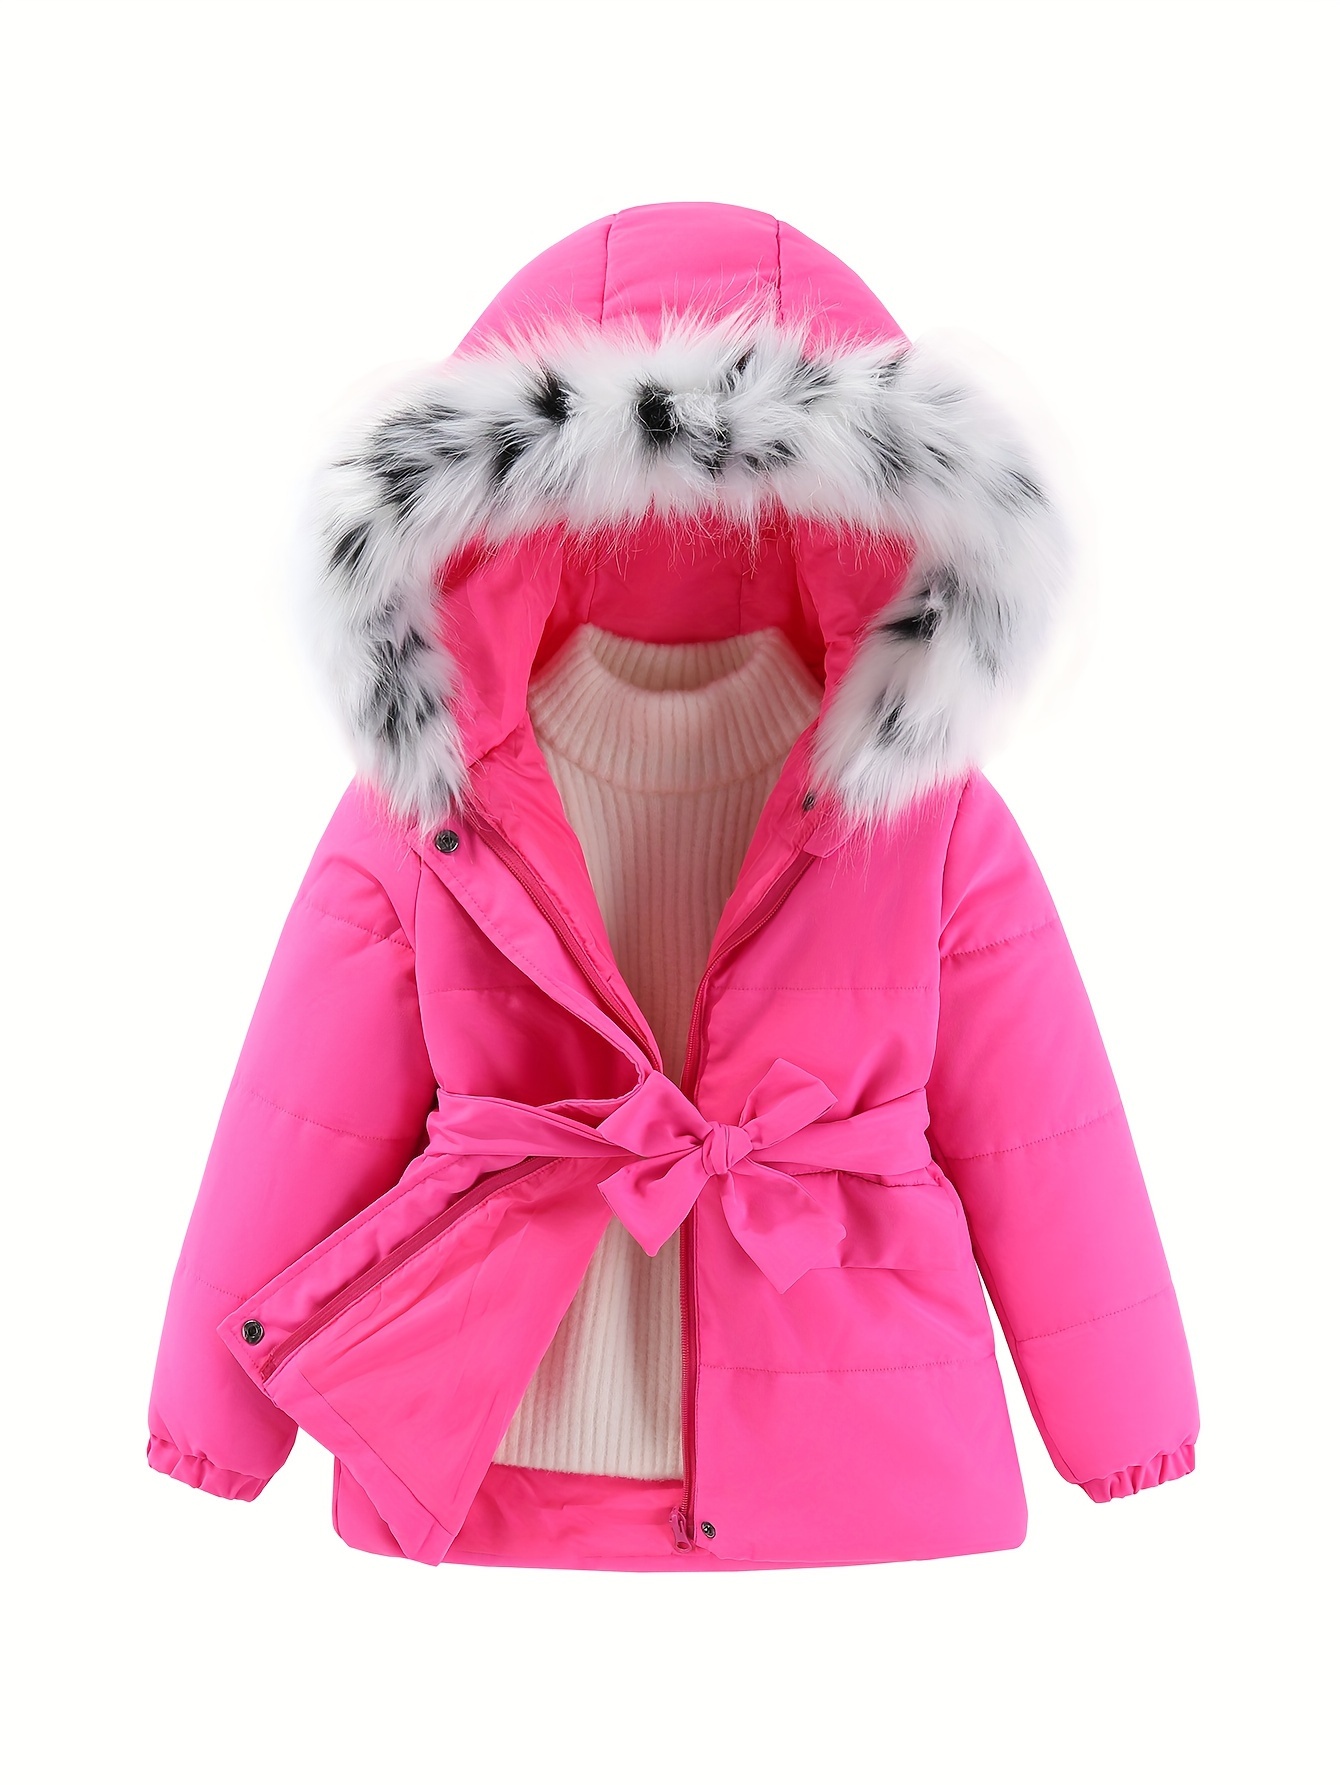 Toddler Girls Winter Windproof Coat Jacket Kids Warm Fleece Hooded